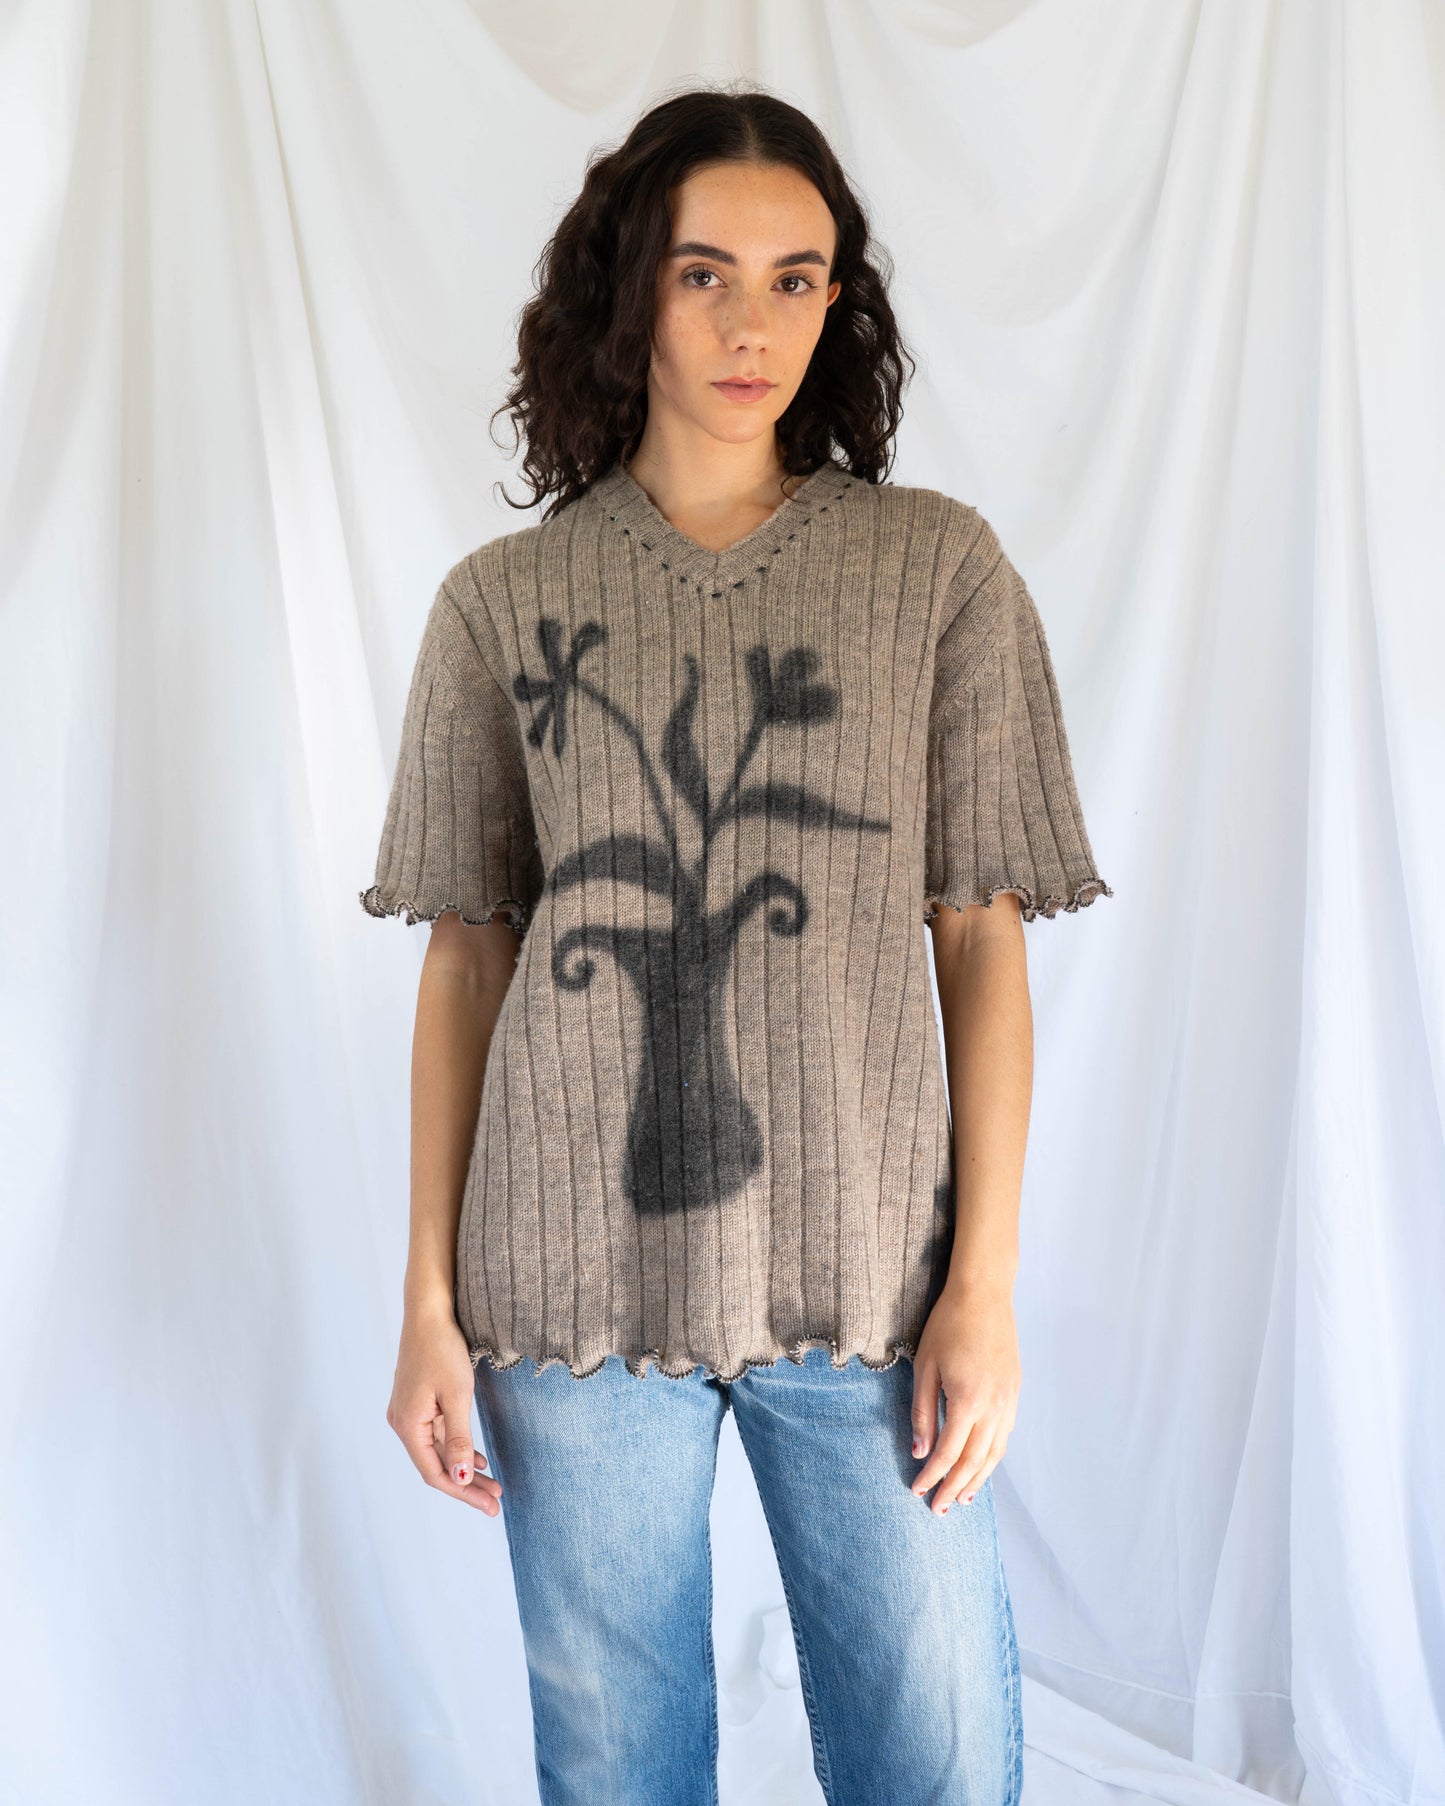 Matisse Short Sleeve Sweater